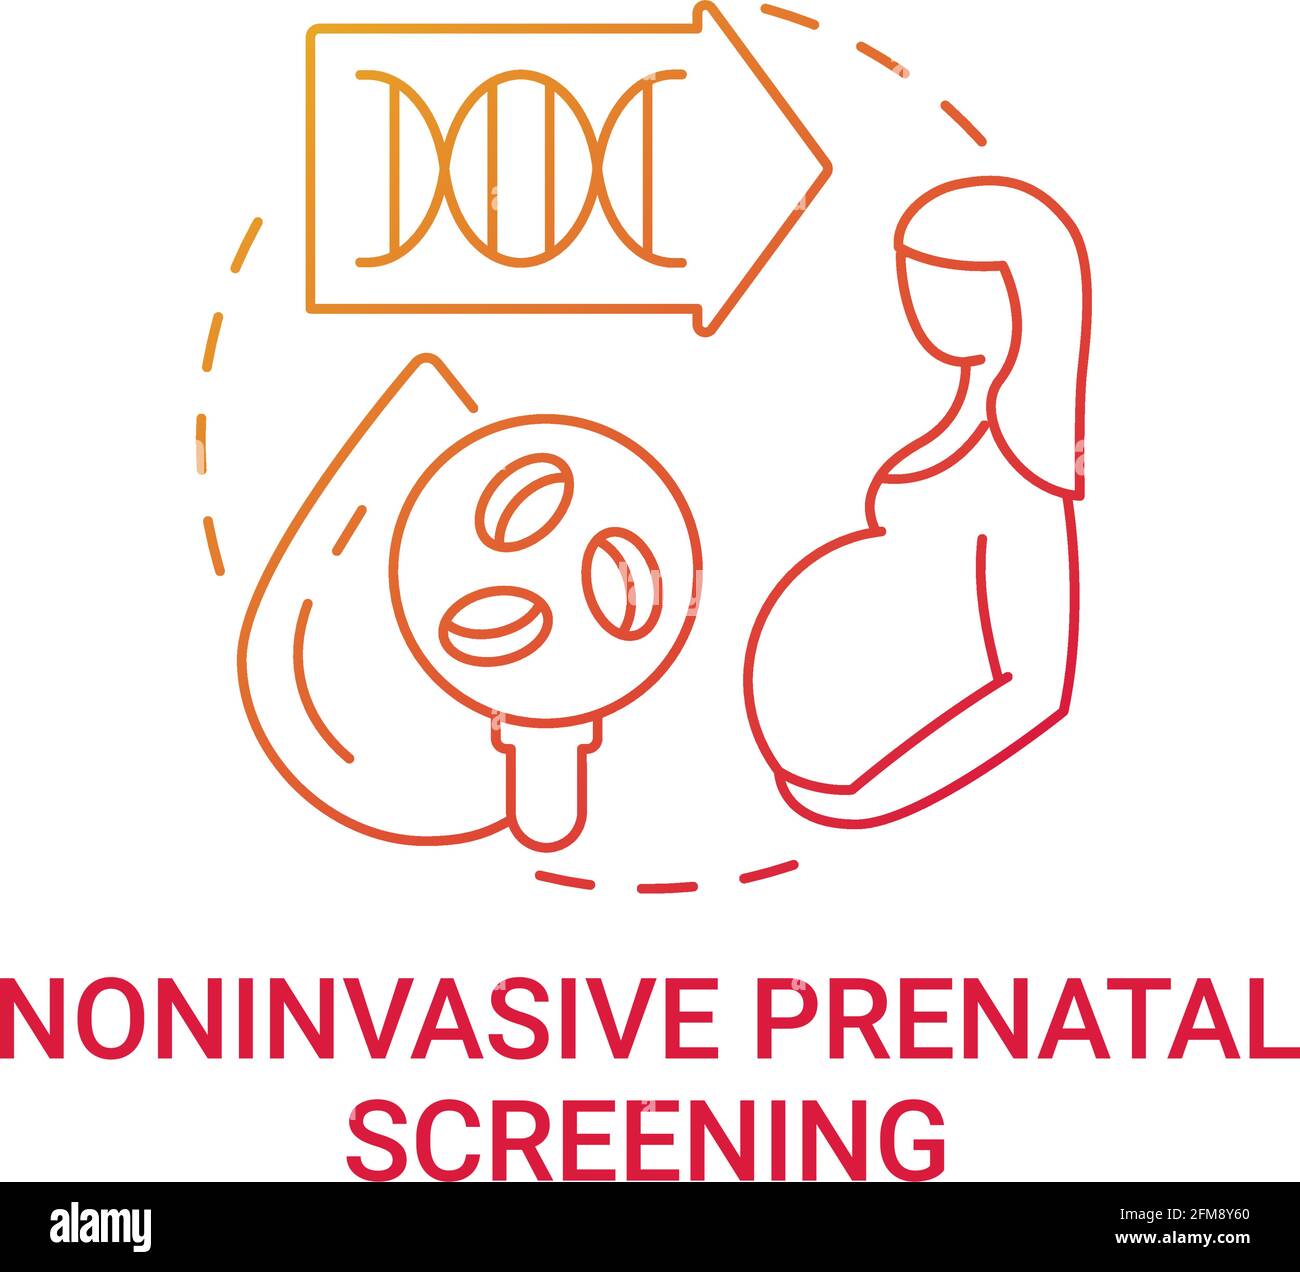 Noninvasive prenatal screening red gradient concept icon Stock Vector ...